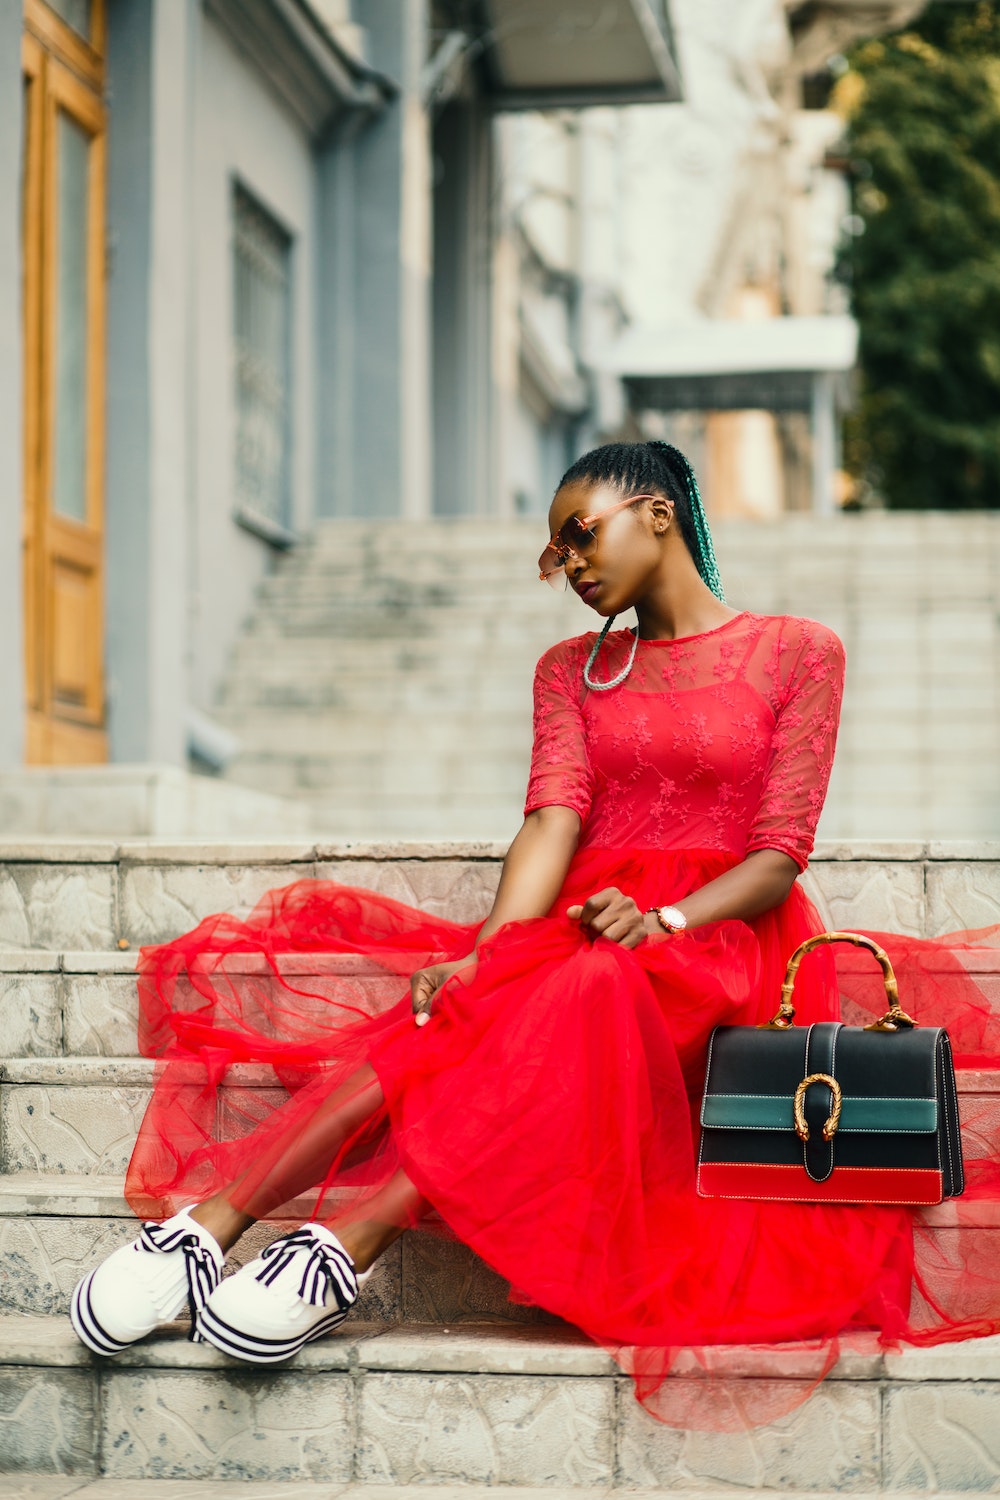 Beetlejuice fashion 80s red dress